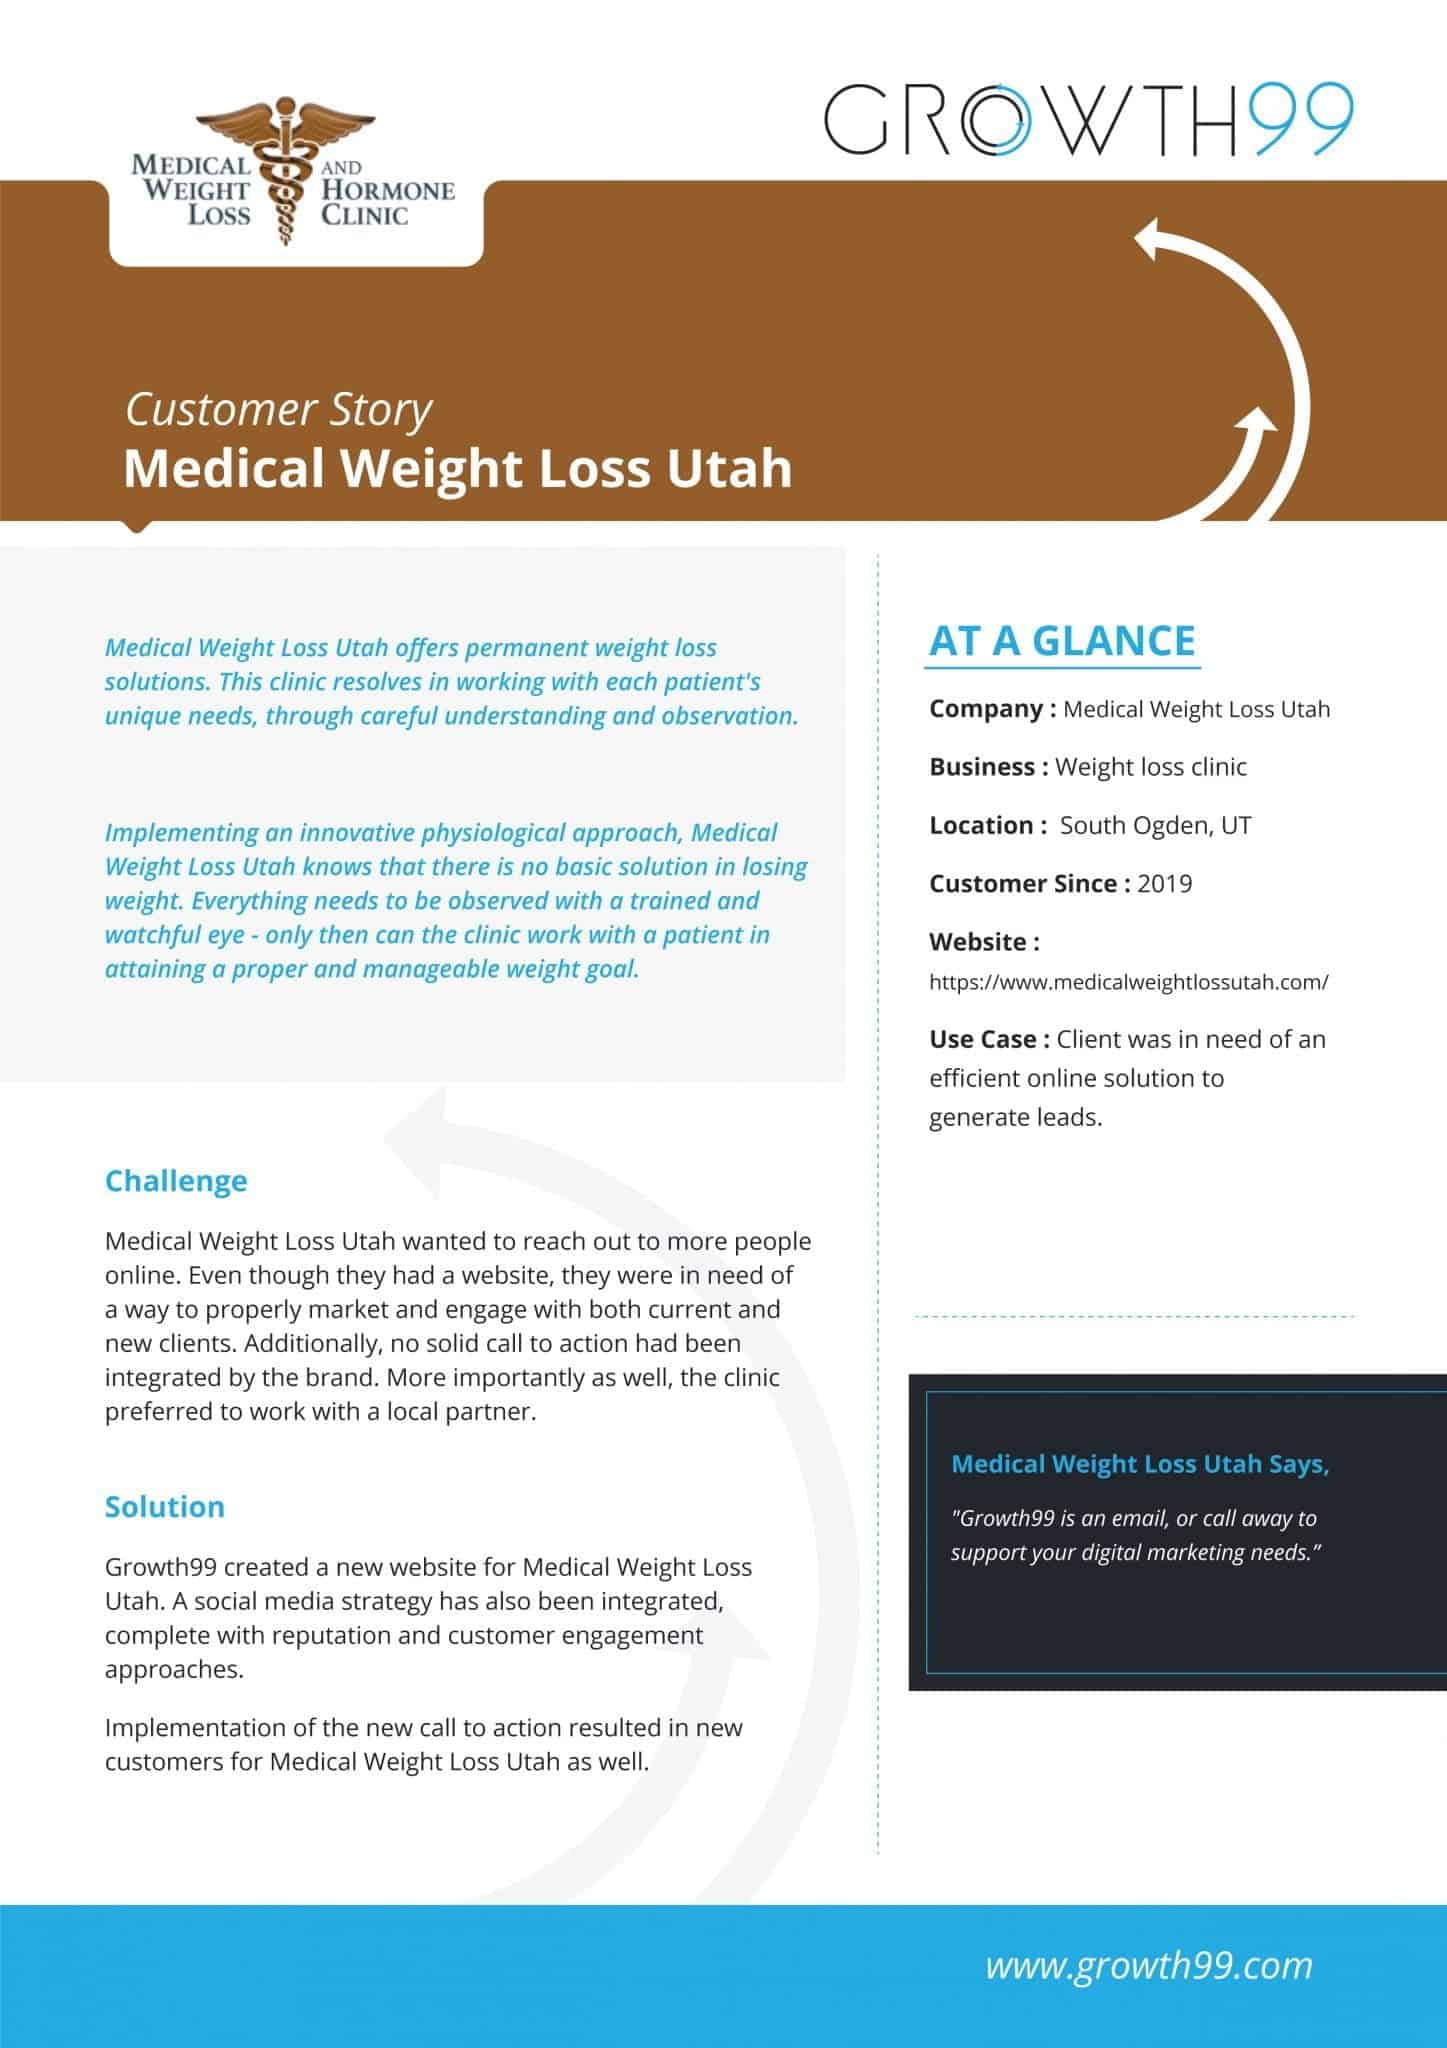 Medical Weight Loss Utah Case Study